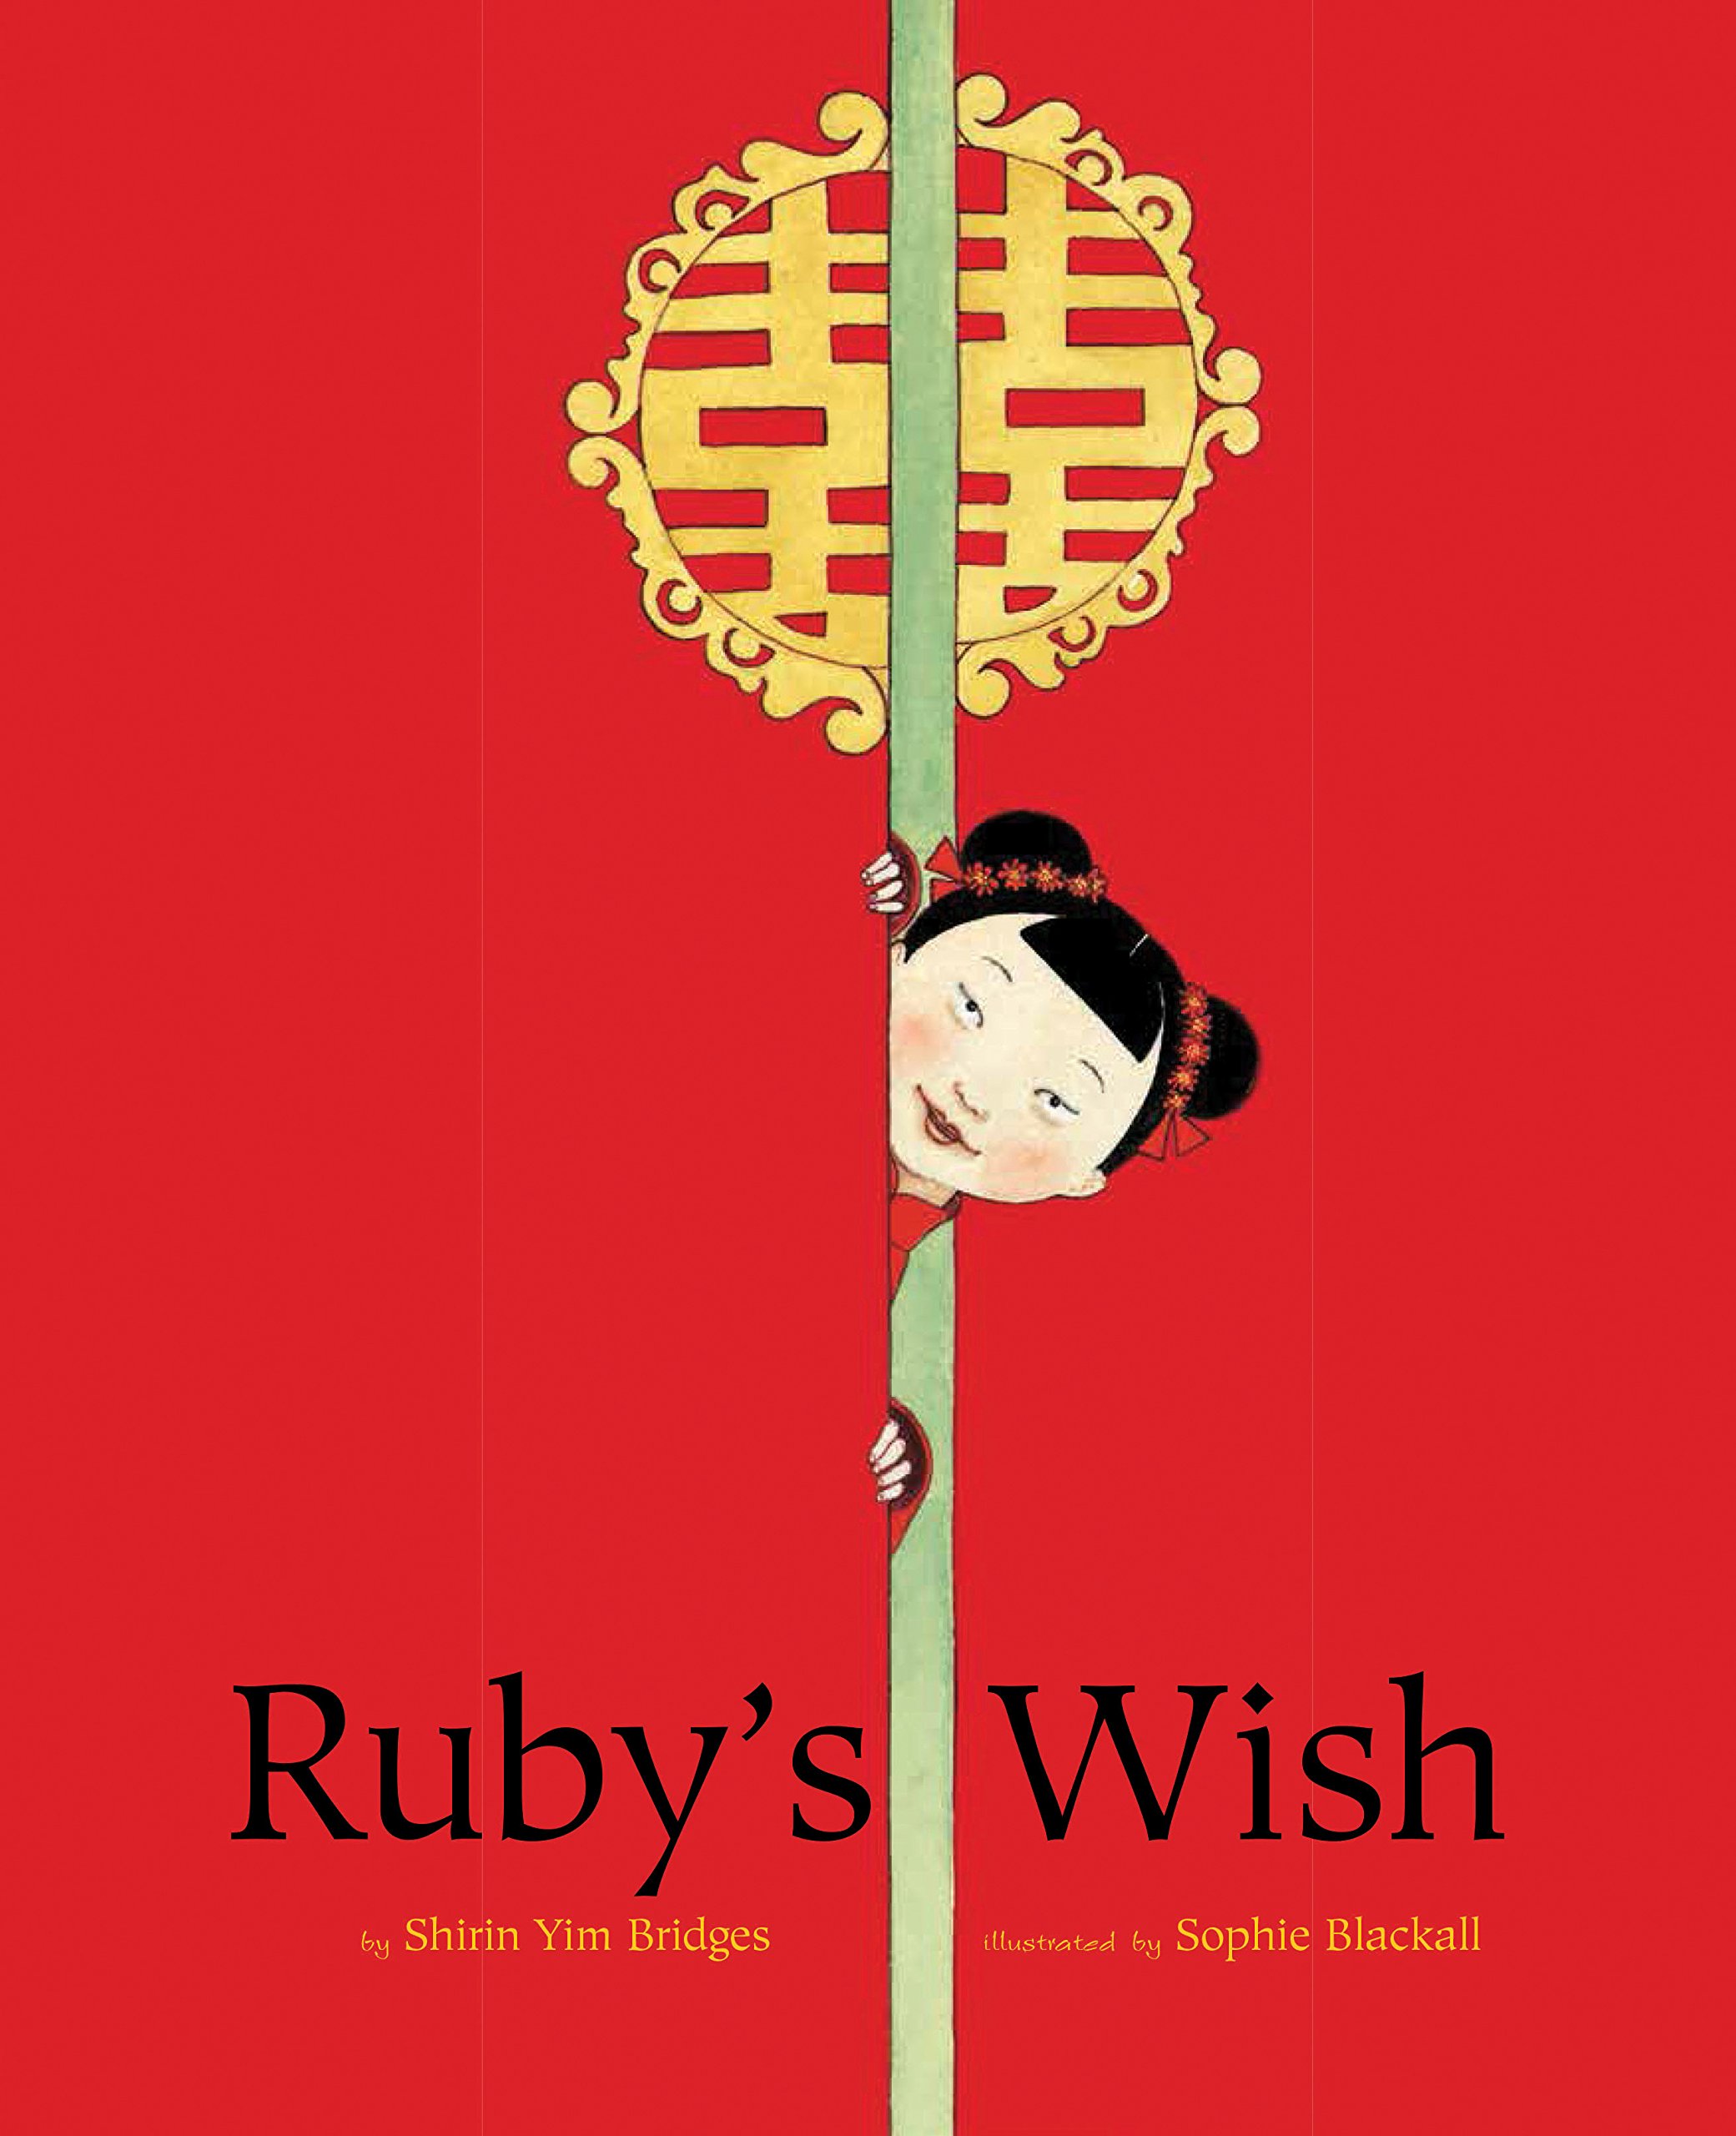 Ruby’s Wish